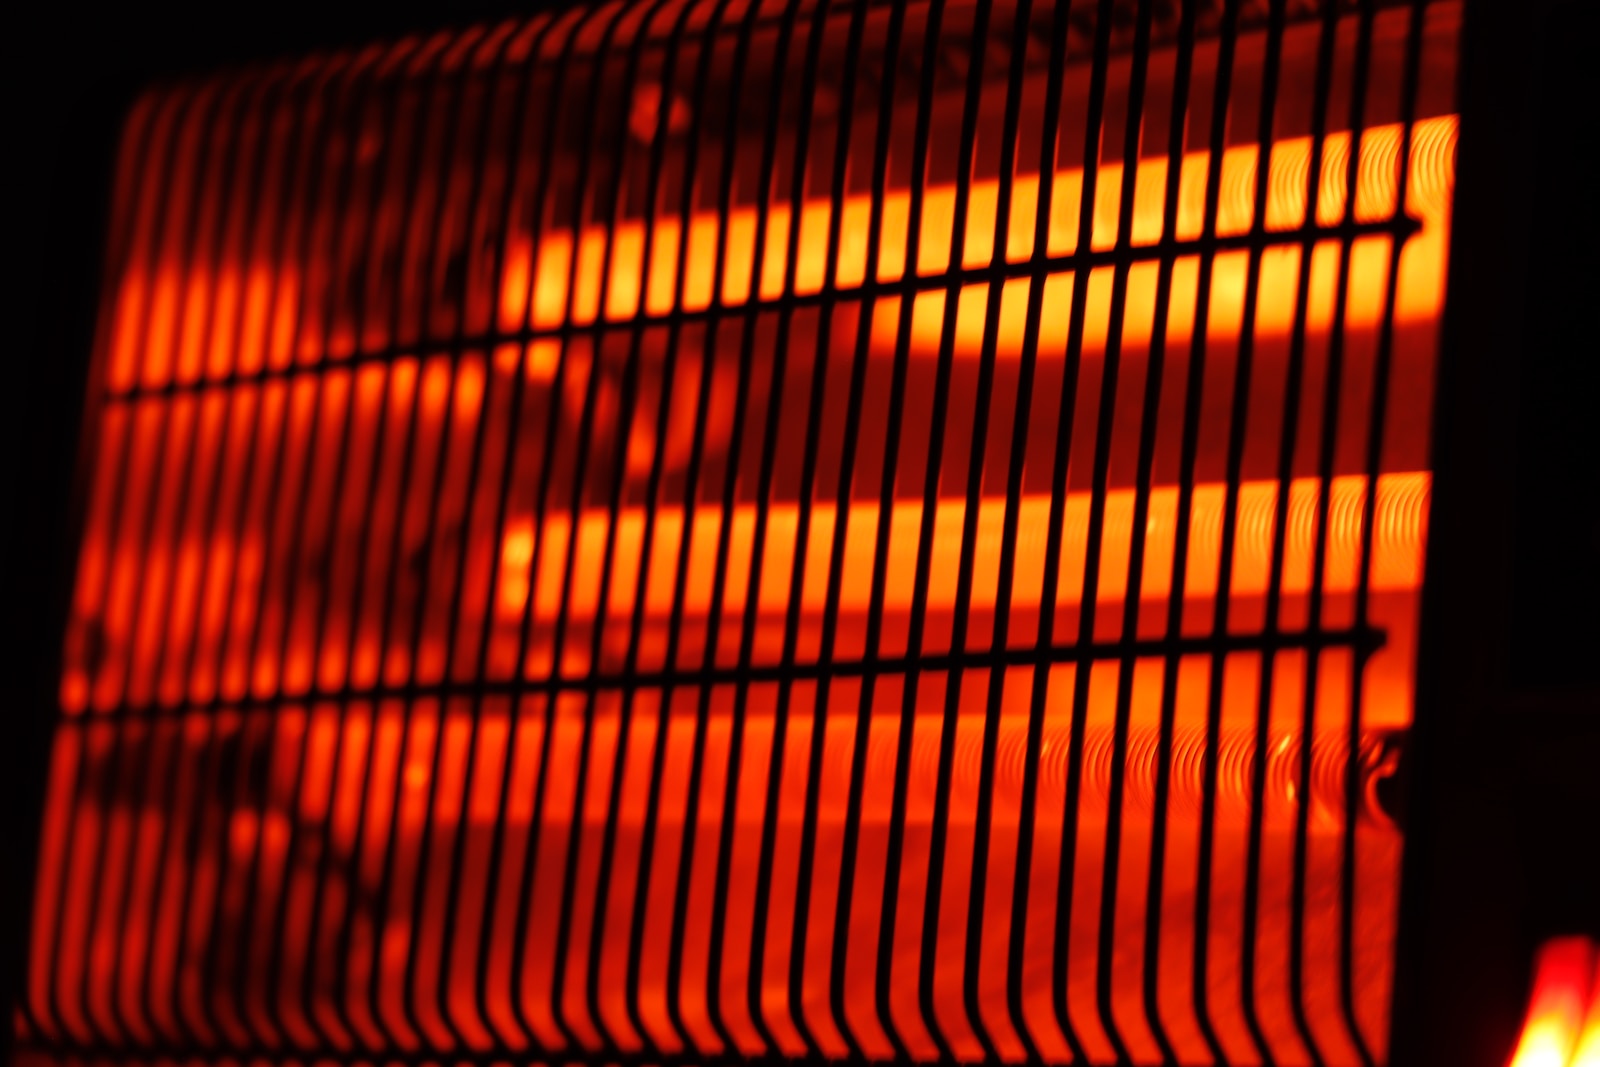 a close up of a heater in the dark